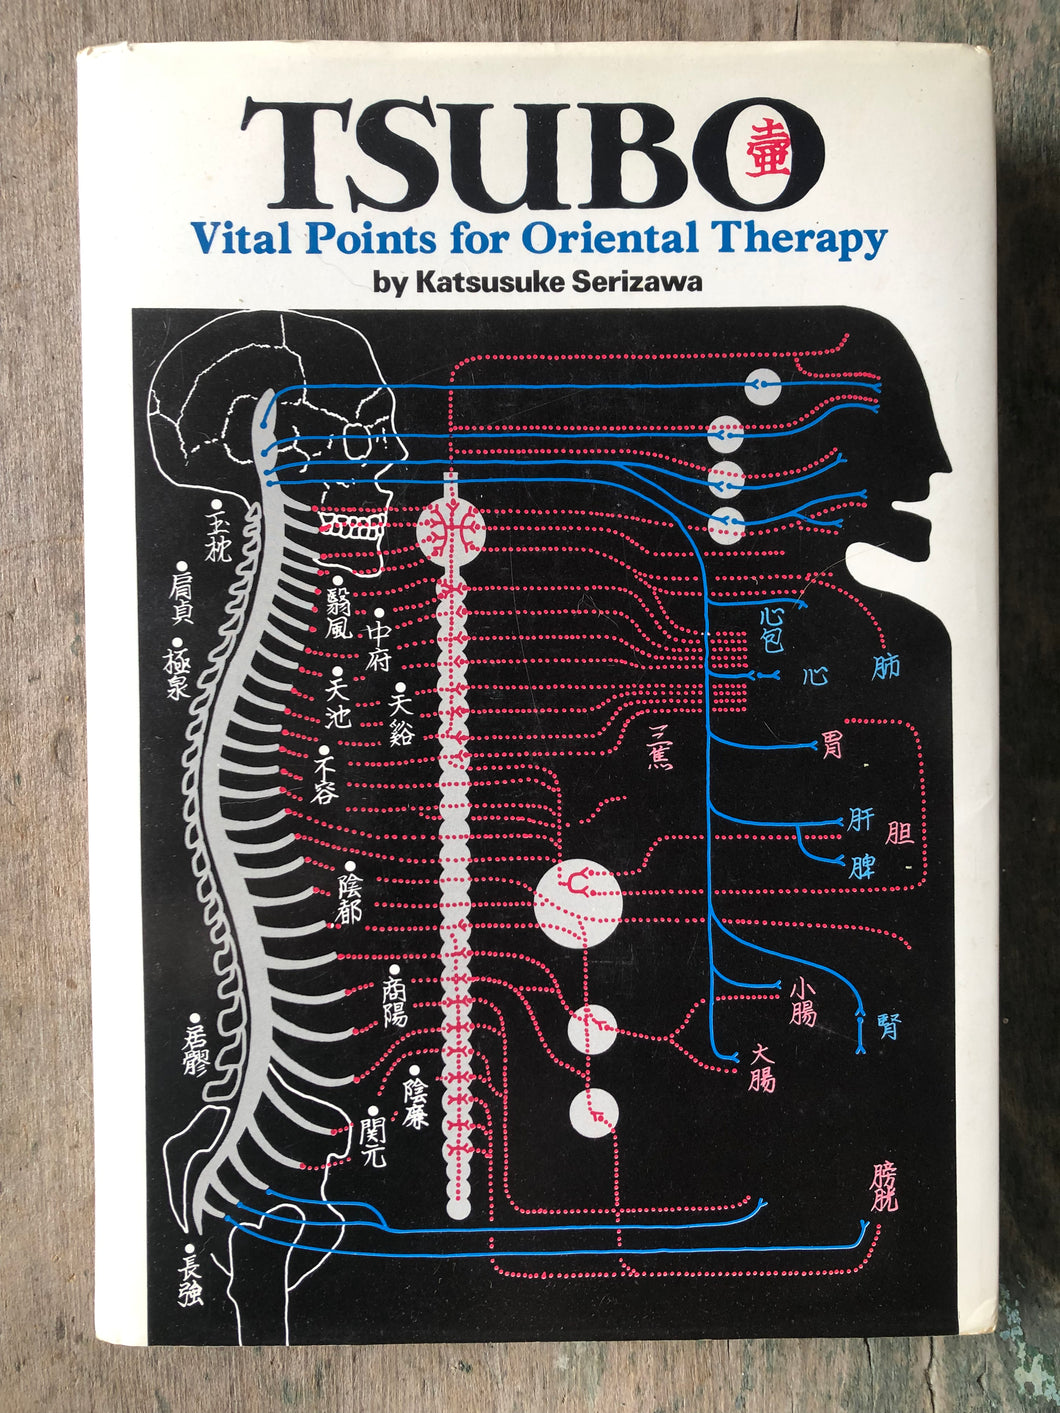 Tsubo: Vital Points for Oriental Therapy. by Katsusuke Serizawa